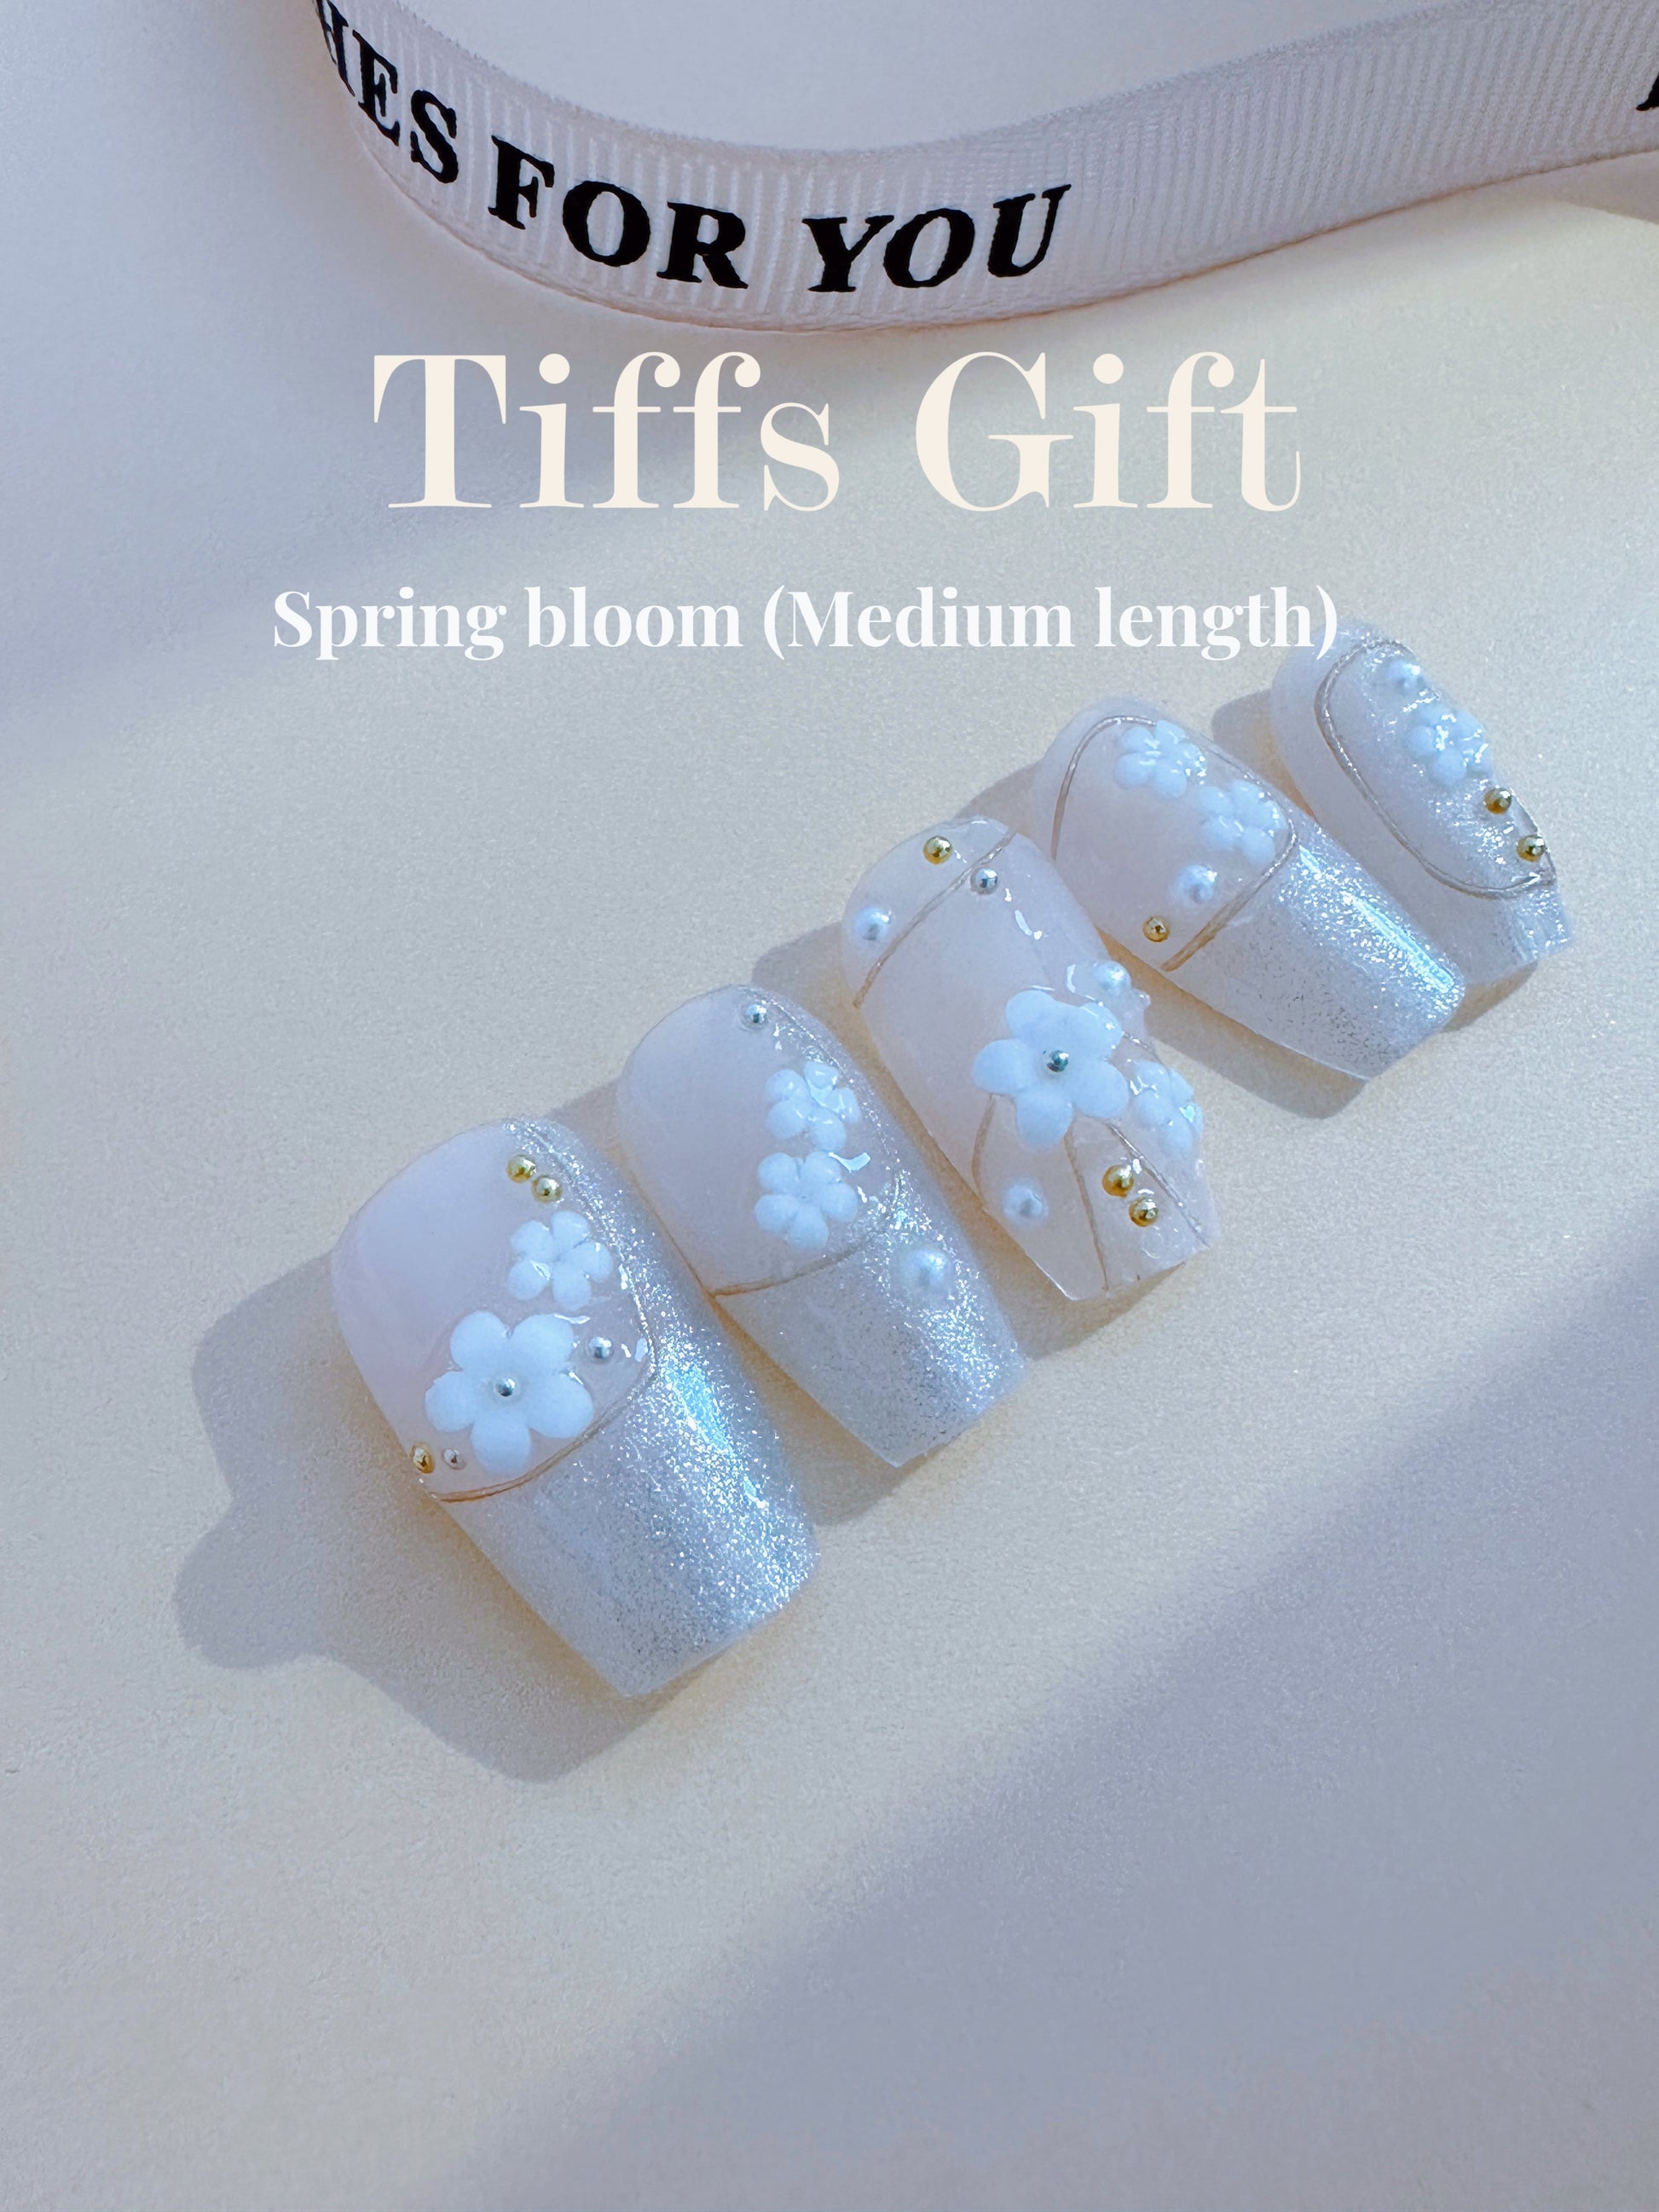 Spring bloom Reusable Hand Made Press On Nails (medium length) - TiffsGift